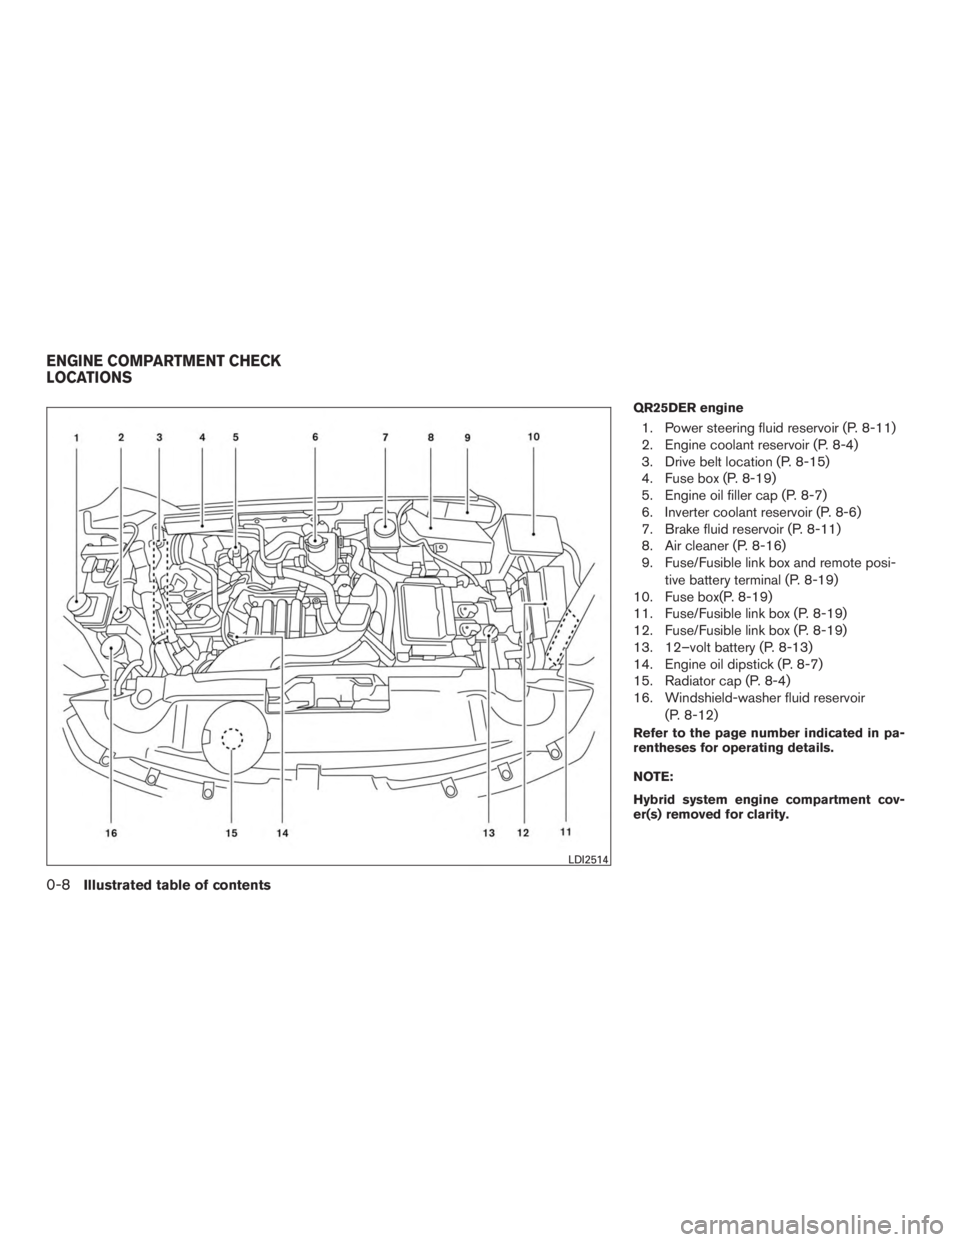 INFINITI QX60 HYBRID 2017  Owners Manual QR25DER engine
1. Power steering fluid reservoir (P. 8-11)
2. Engine coolant reservoir (P. 8-4)
3. Drive belt location (P. 8-15)
4. Fuse box (P. 8-19)
5. Engine oil filler cap (P. 8-7)
6. Inverter coo